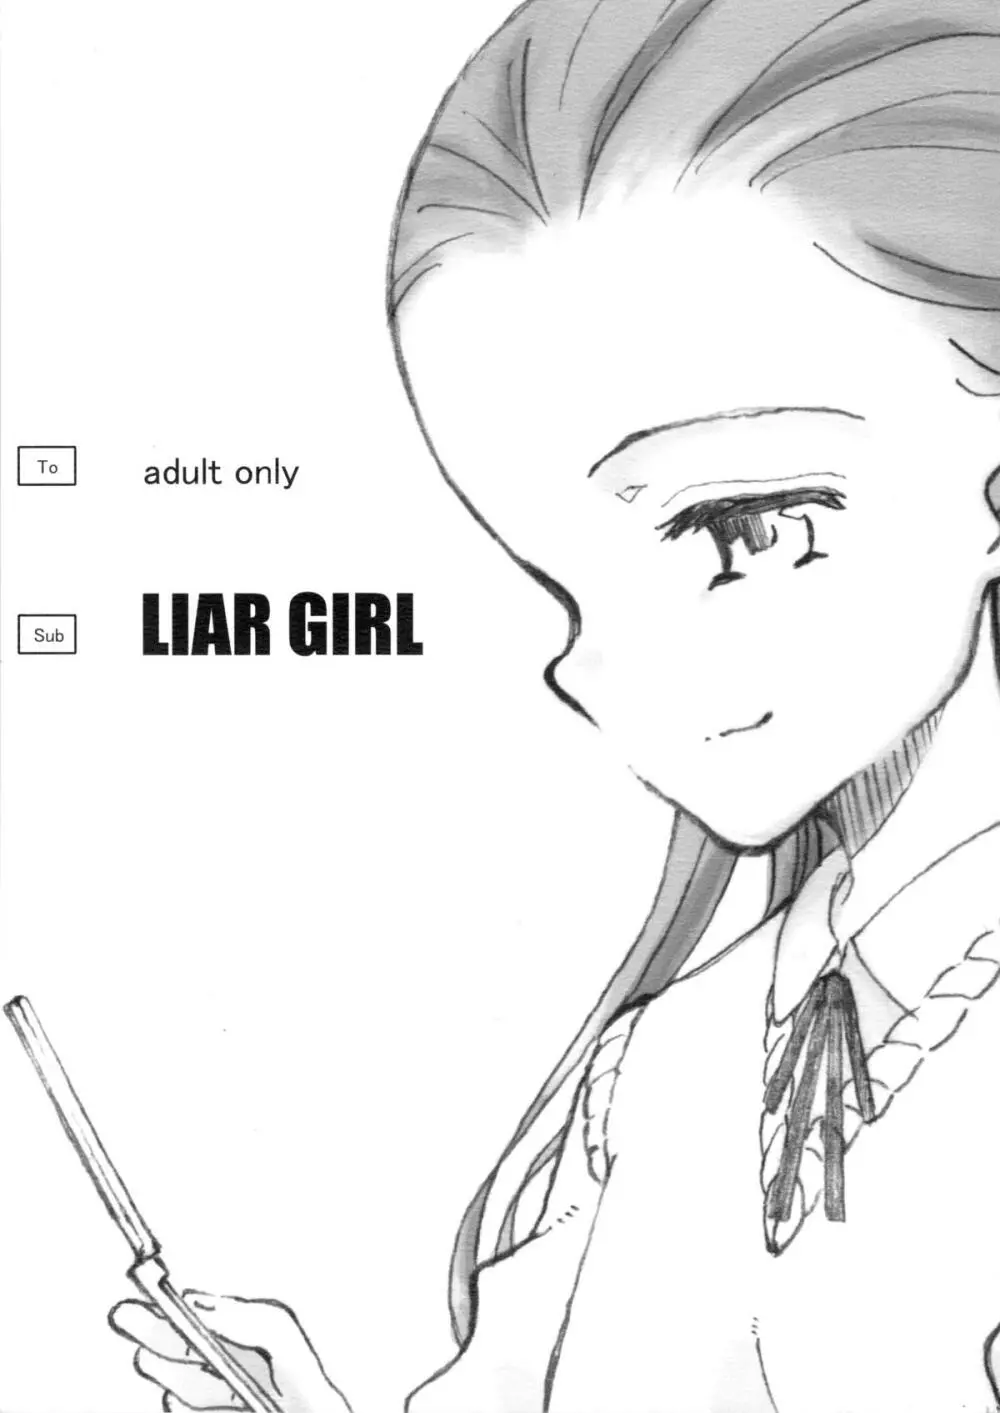 LIAR GIRL - page1